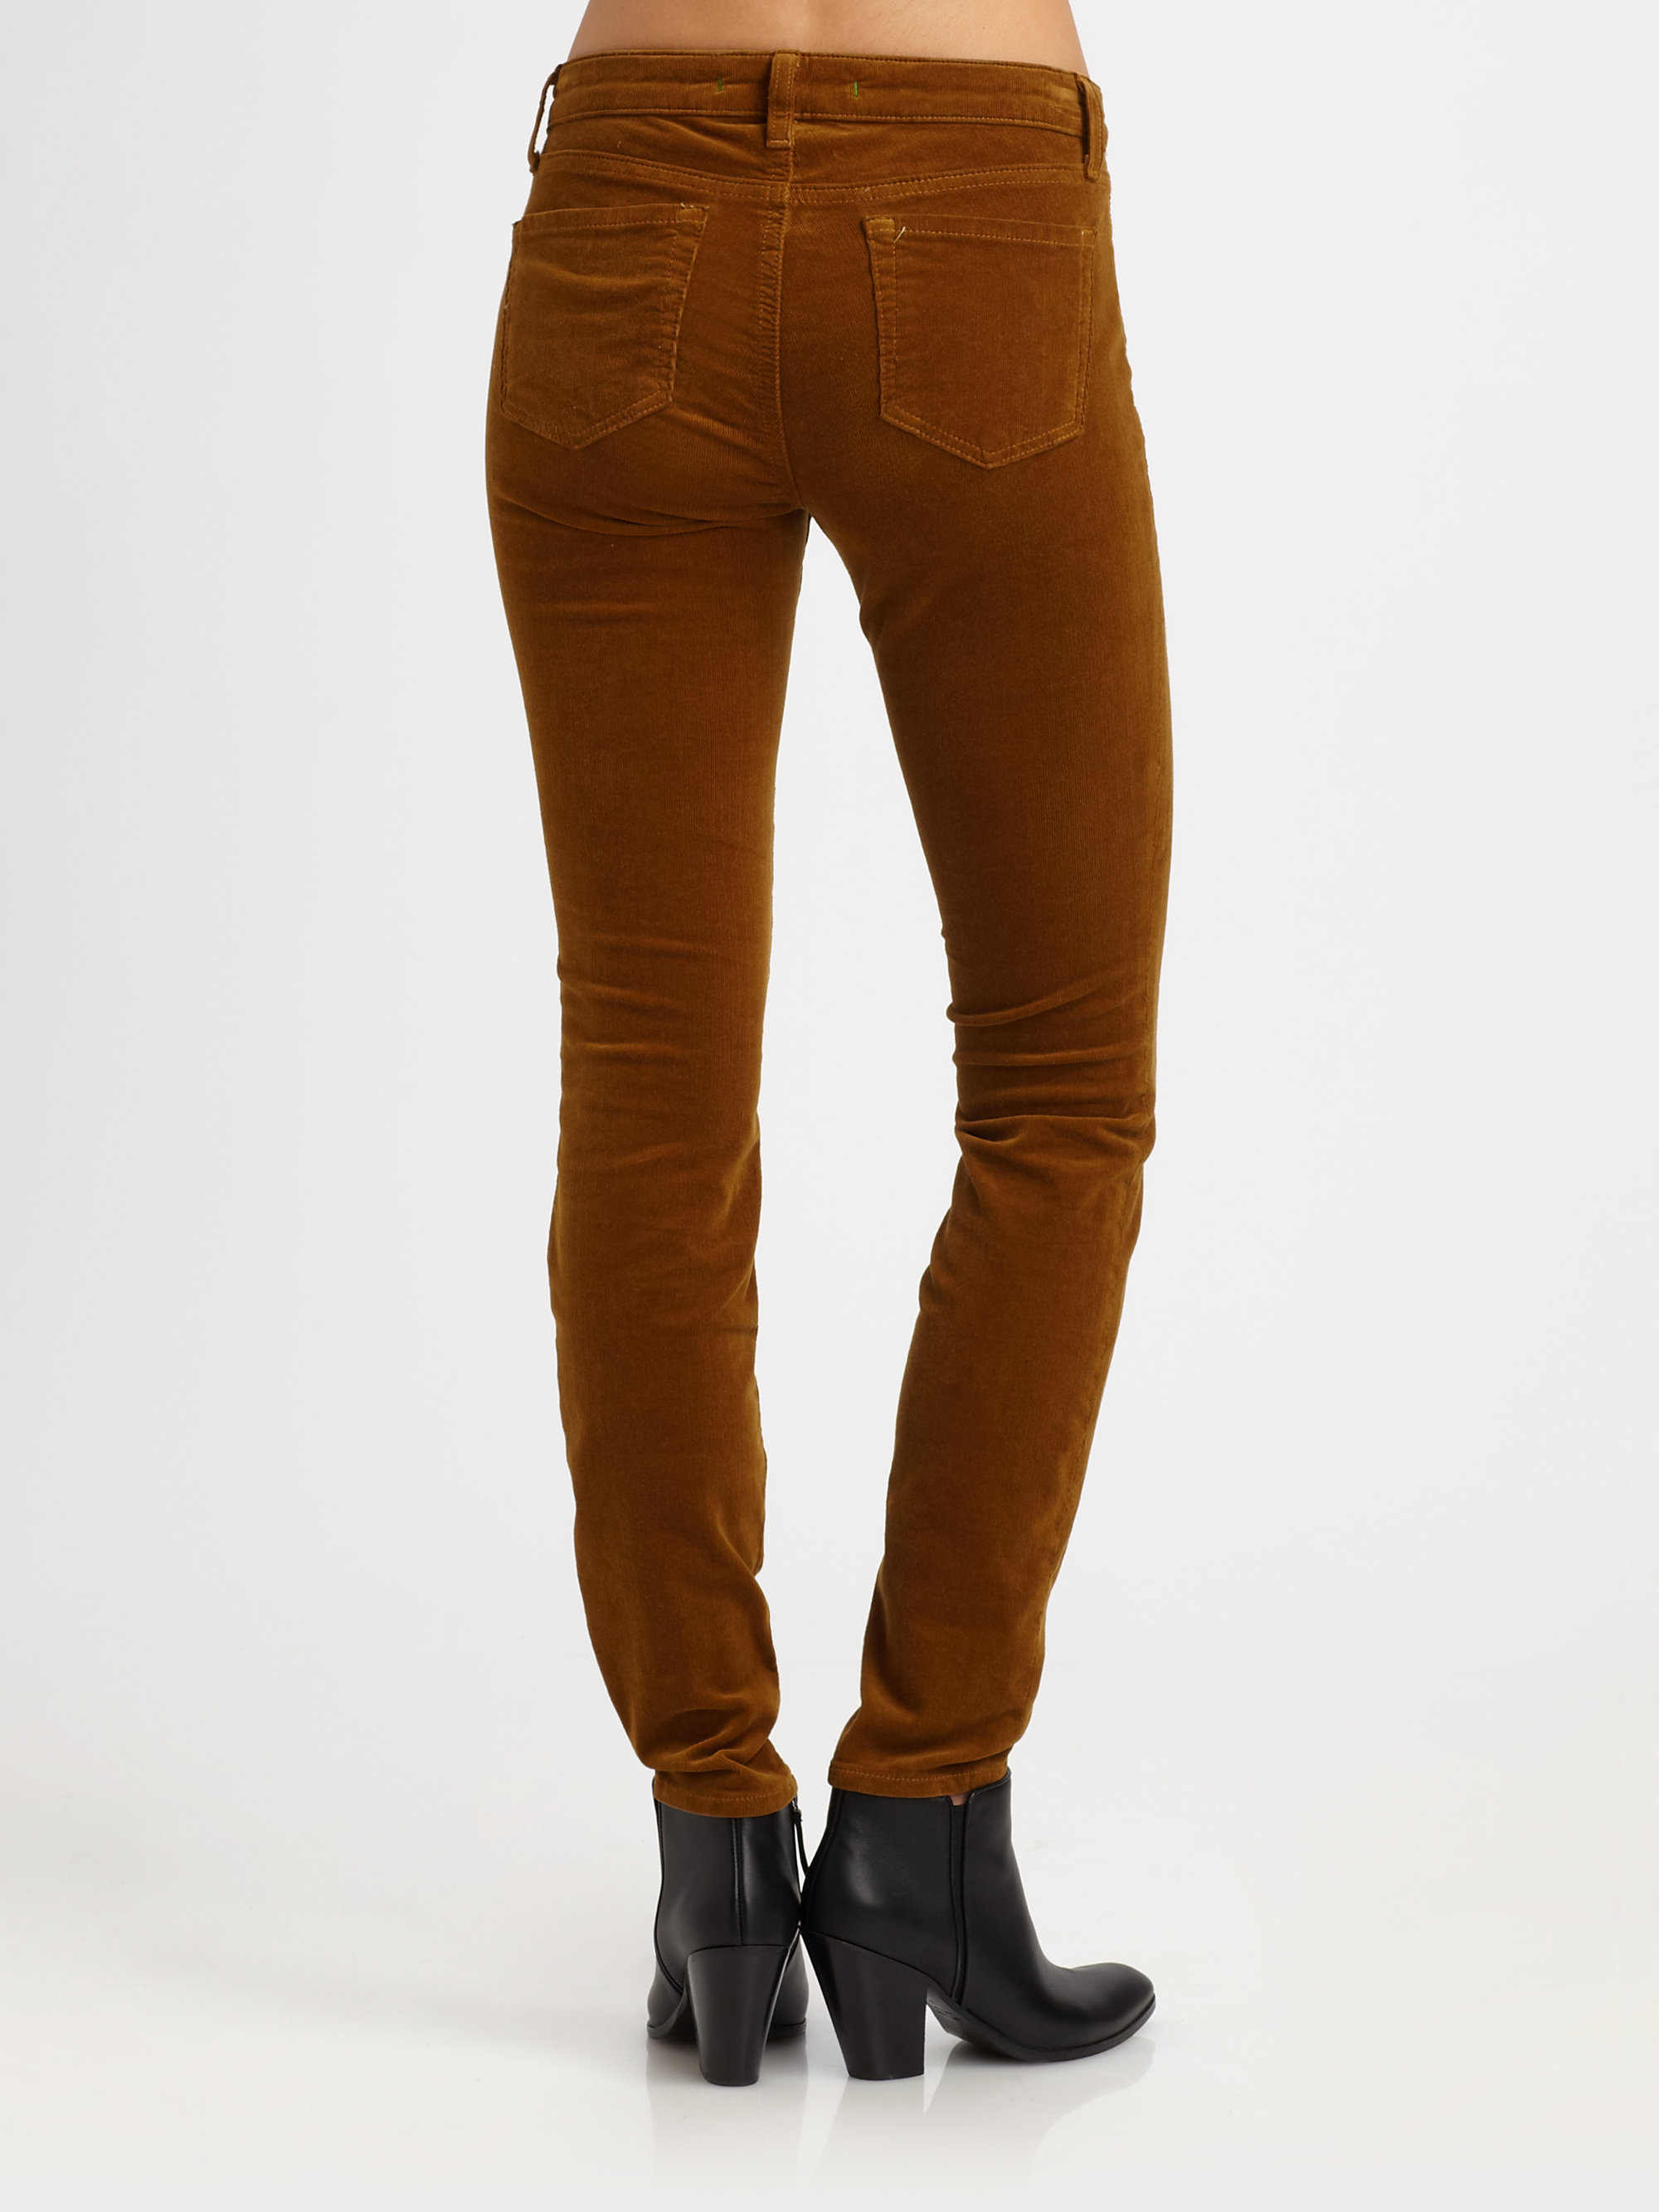 J Brand Corduroy Skinny Jeans in Moss (Brown) - Lyst